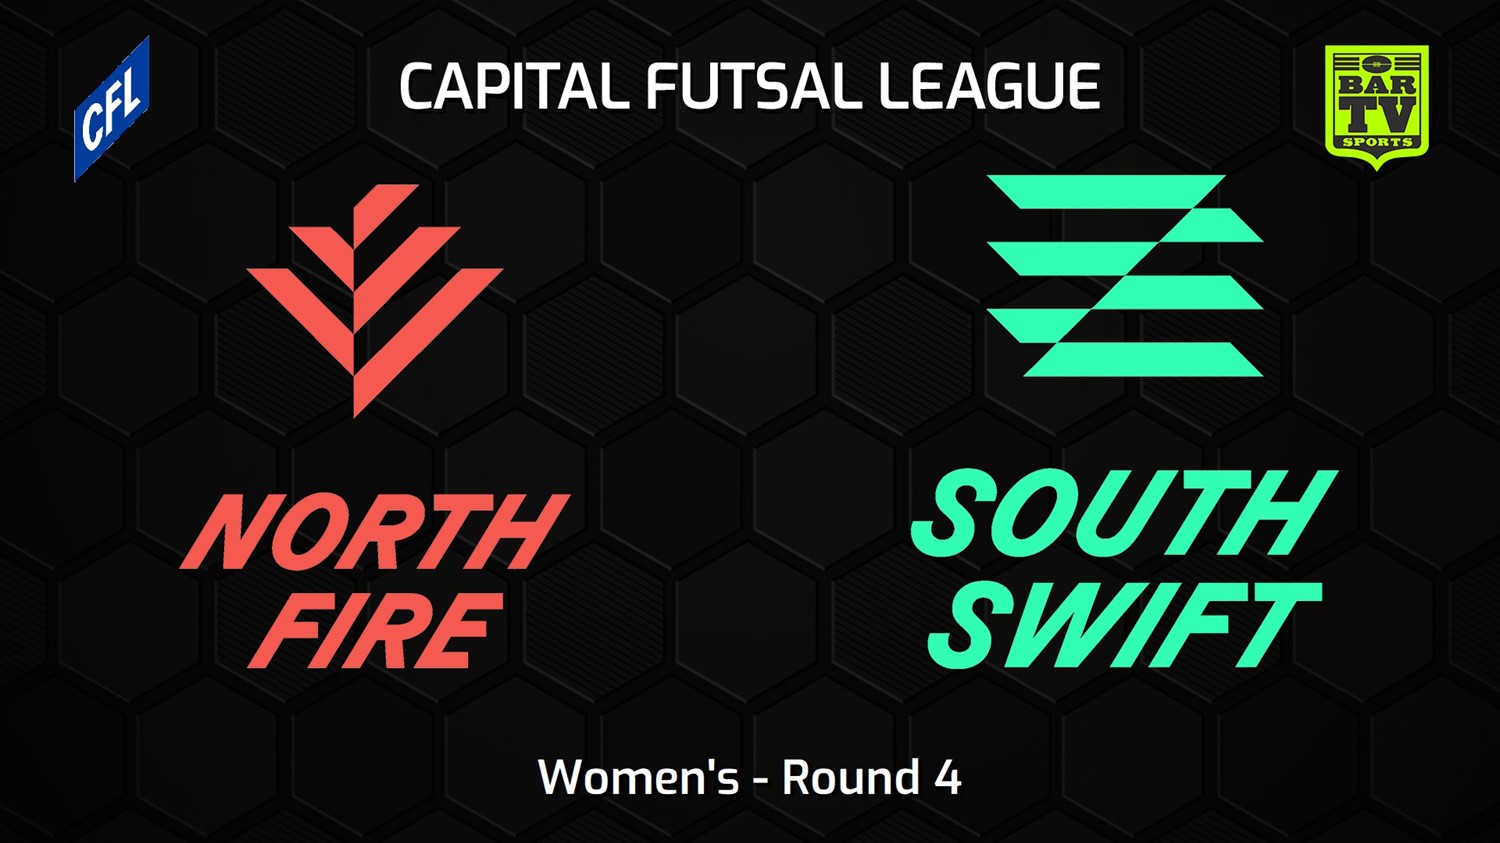 231112-Capital Football Futsal Round 4 - Women's - North Canberra Fire v South Canberra Swift Minigame Slate Image